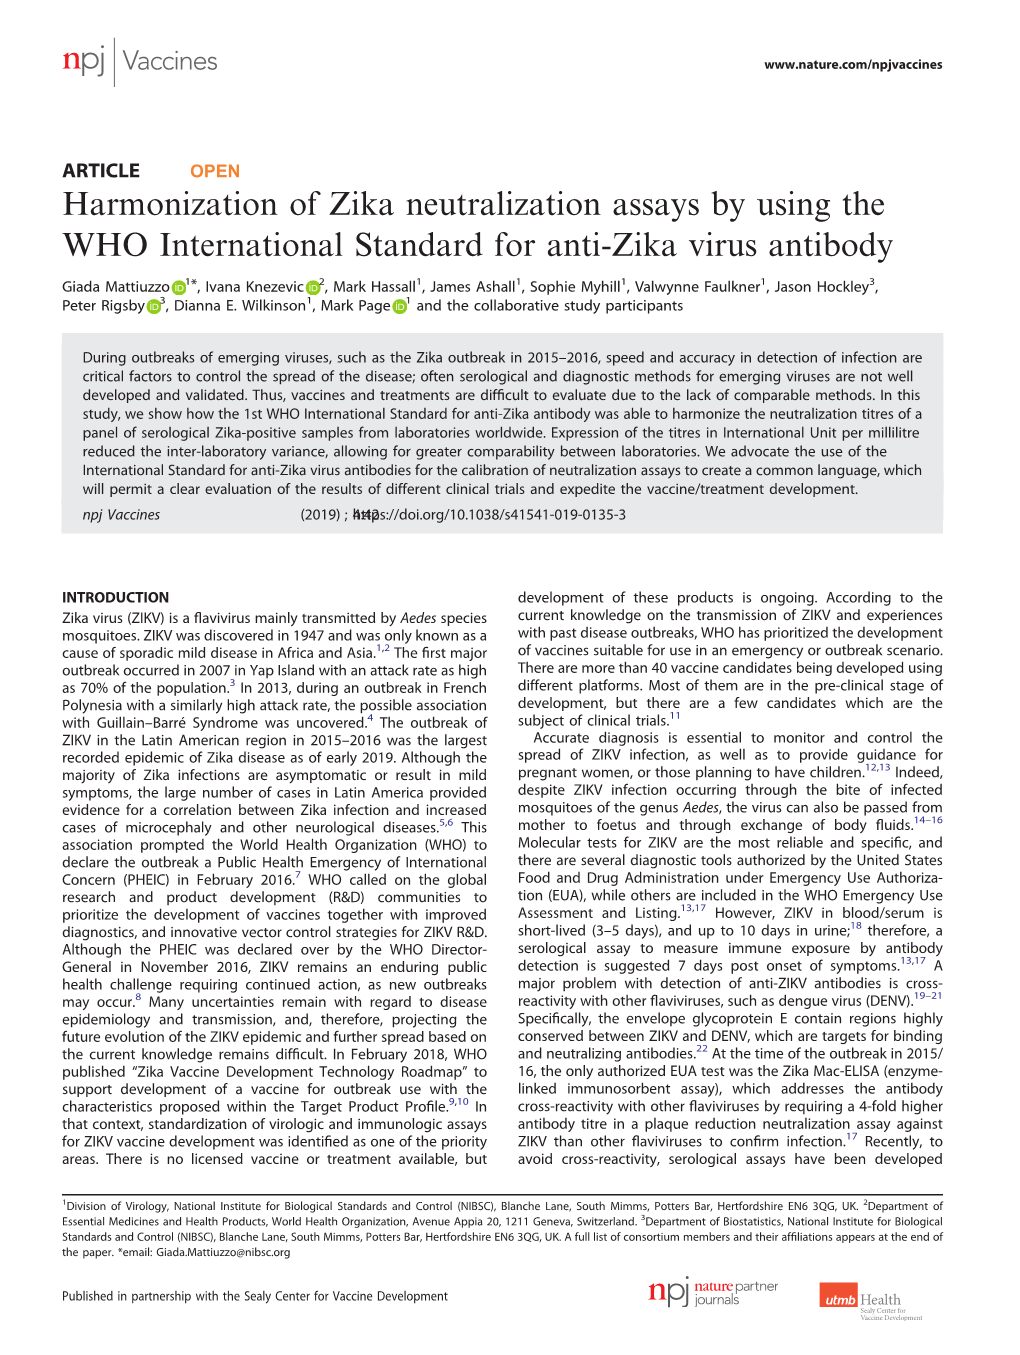 Harmonization of Zika Neutralization Assays by Using the WHO International Standard for Anti-Zika Virus Antibody